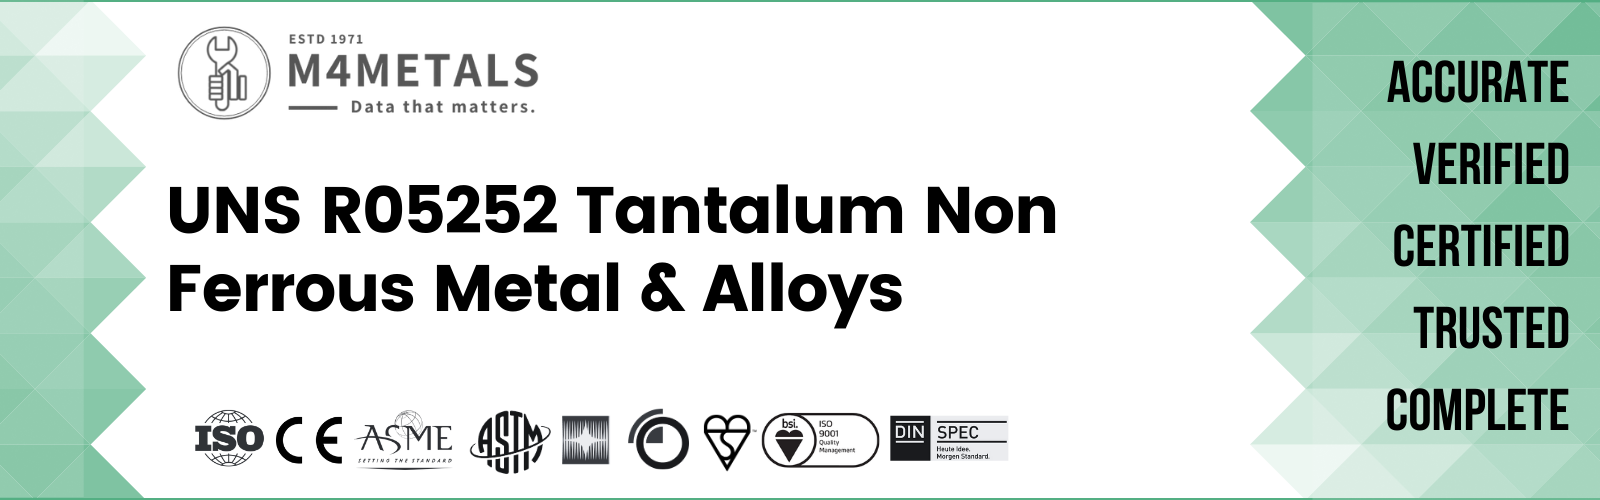 Tantalum UNS R05252